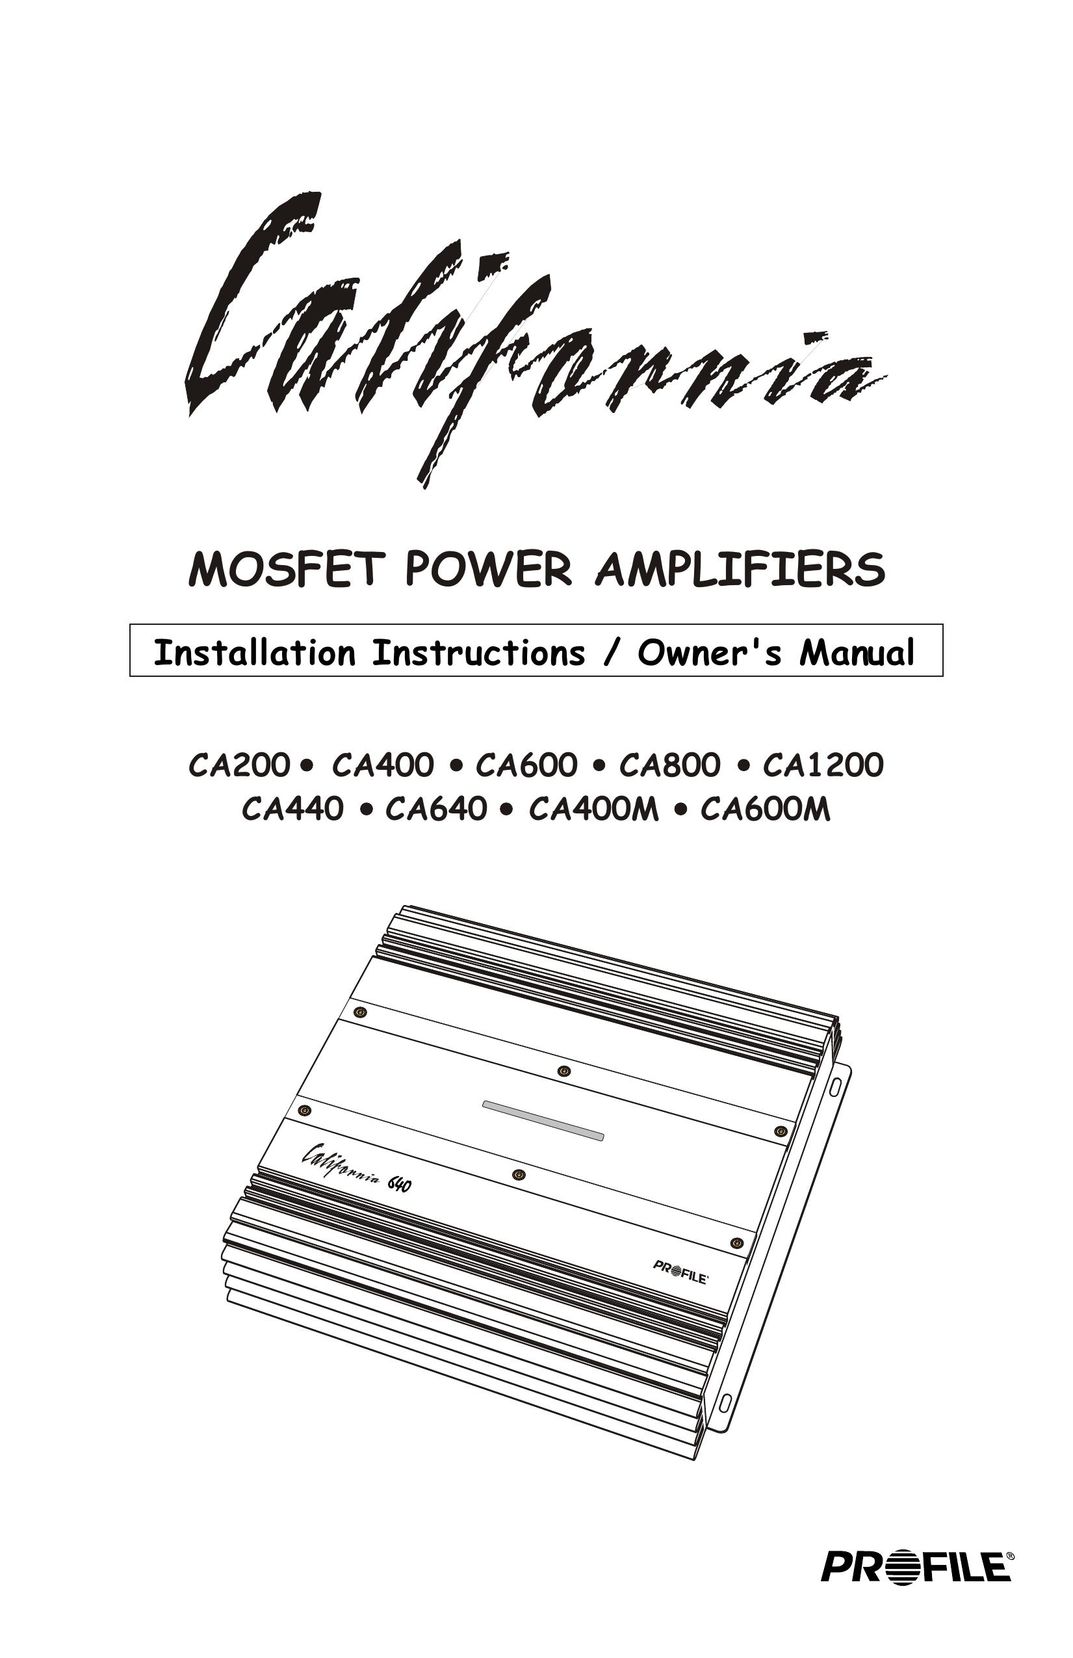 Profile CA400 Stereo Amplifier User Manual